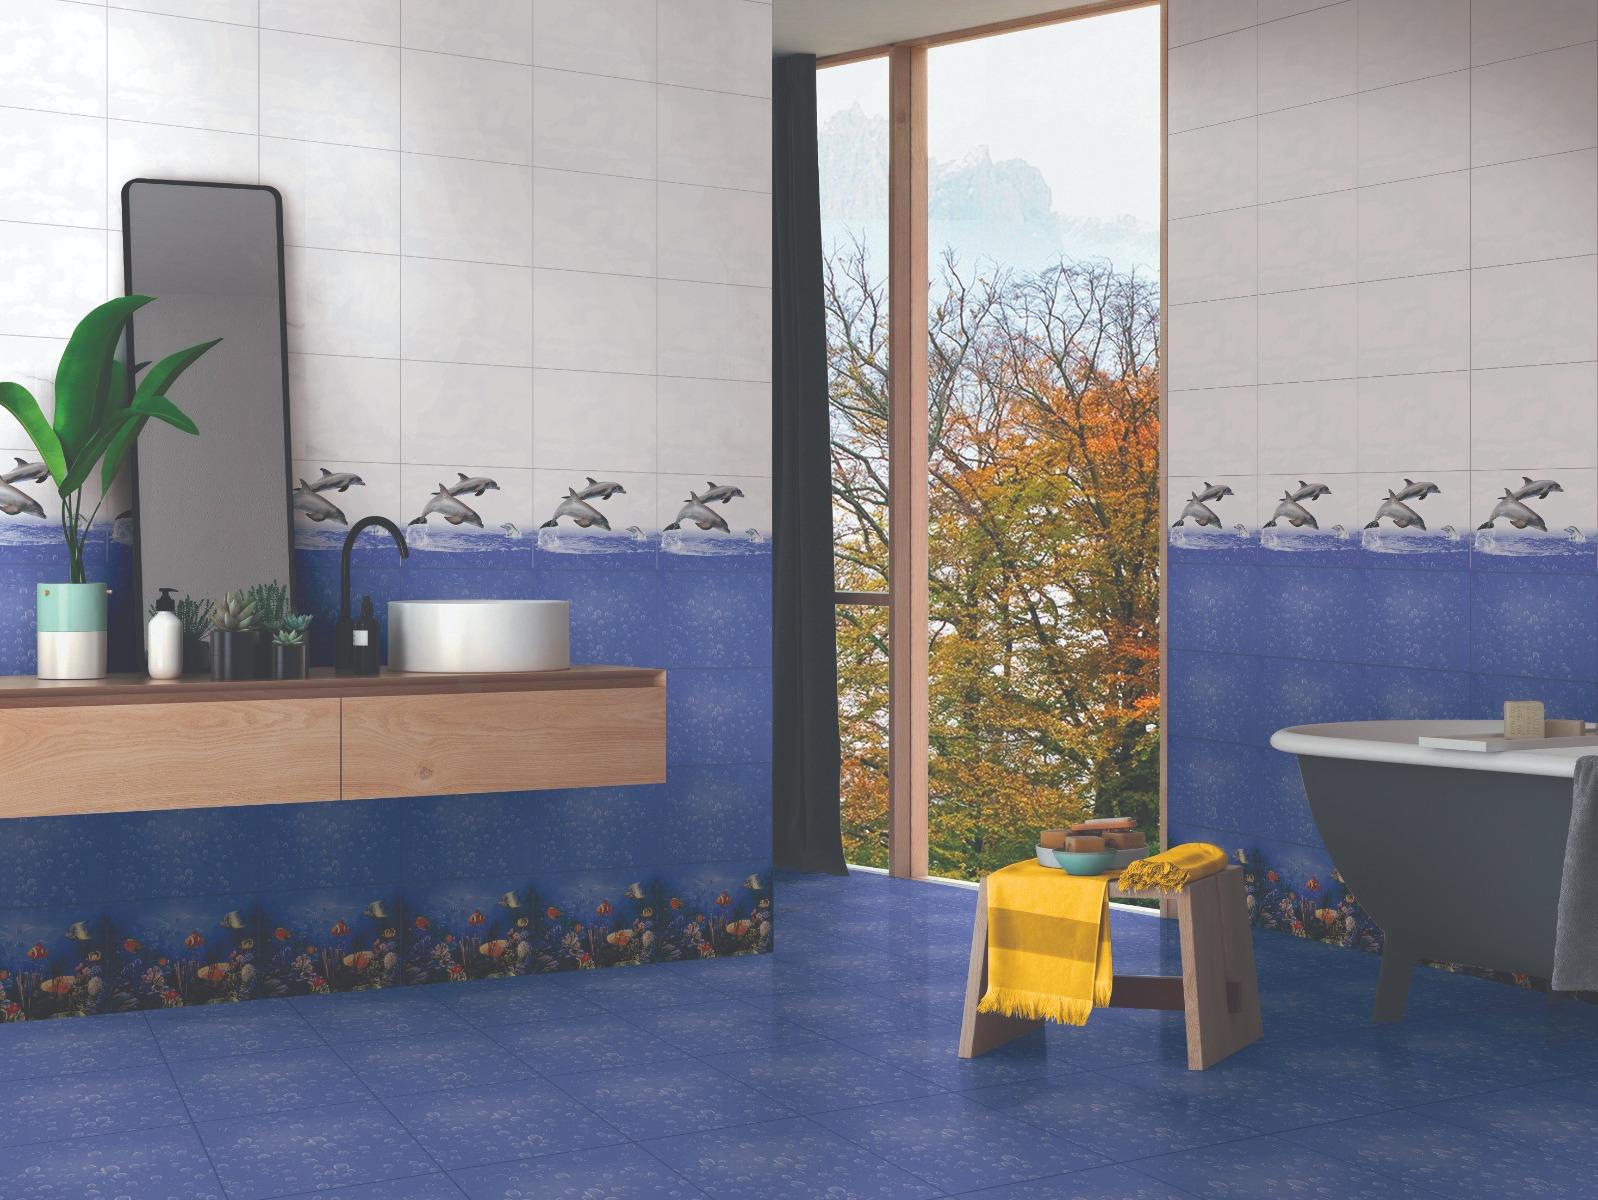 Wall Tiles for Bathroom Tiles, Accent Tiles